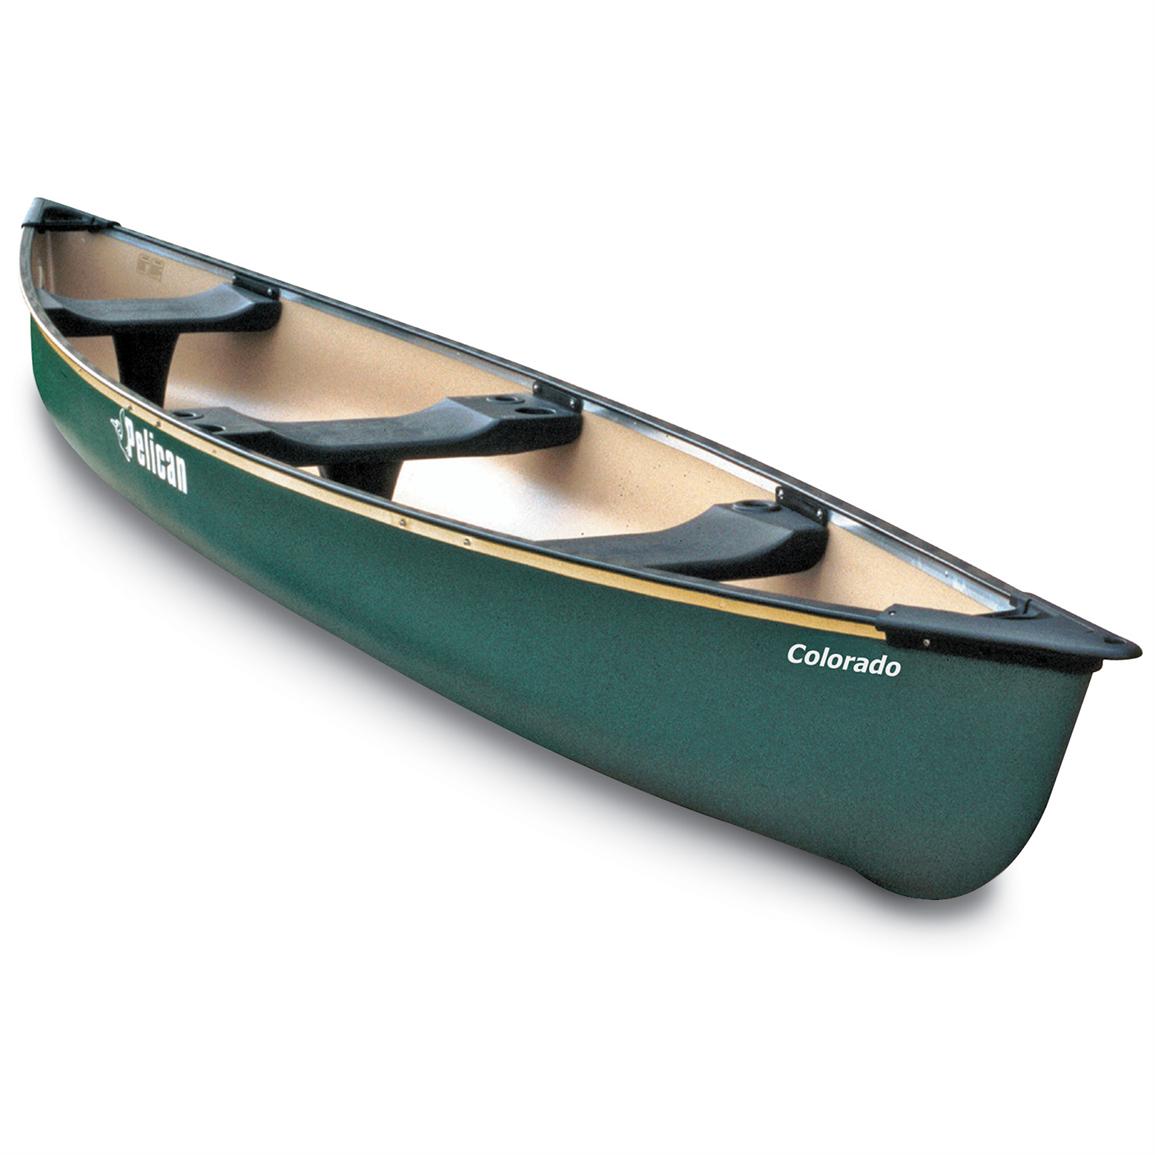 Pelican® Colorado Canoe - 88263, Canoes & Kayaks at Sportsman's Guide1155 x 1155